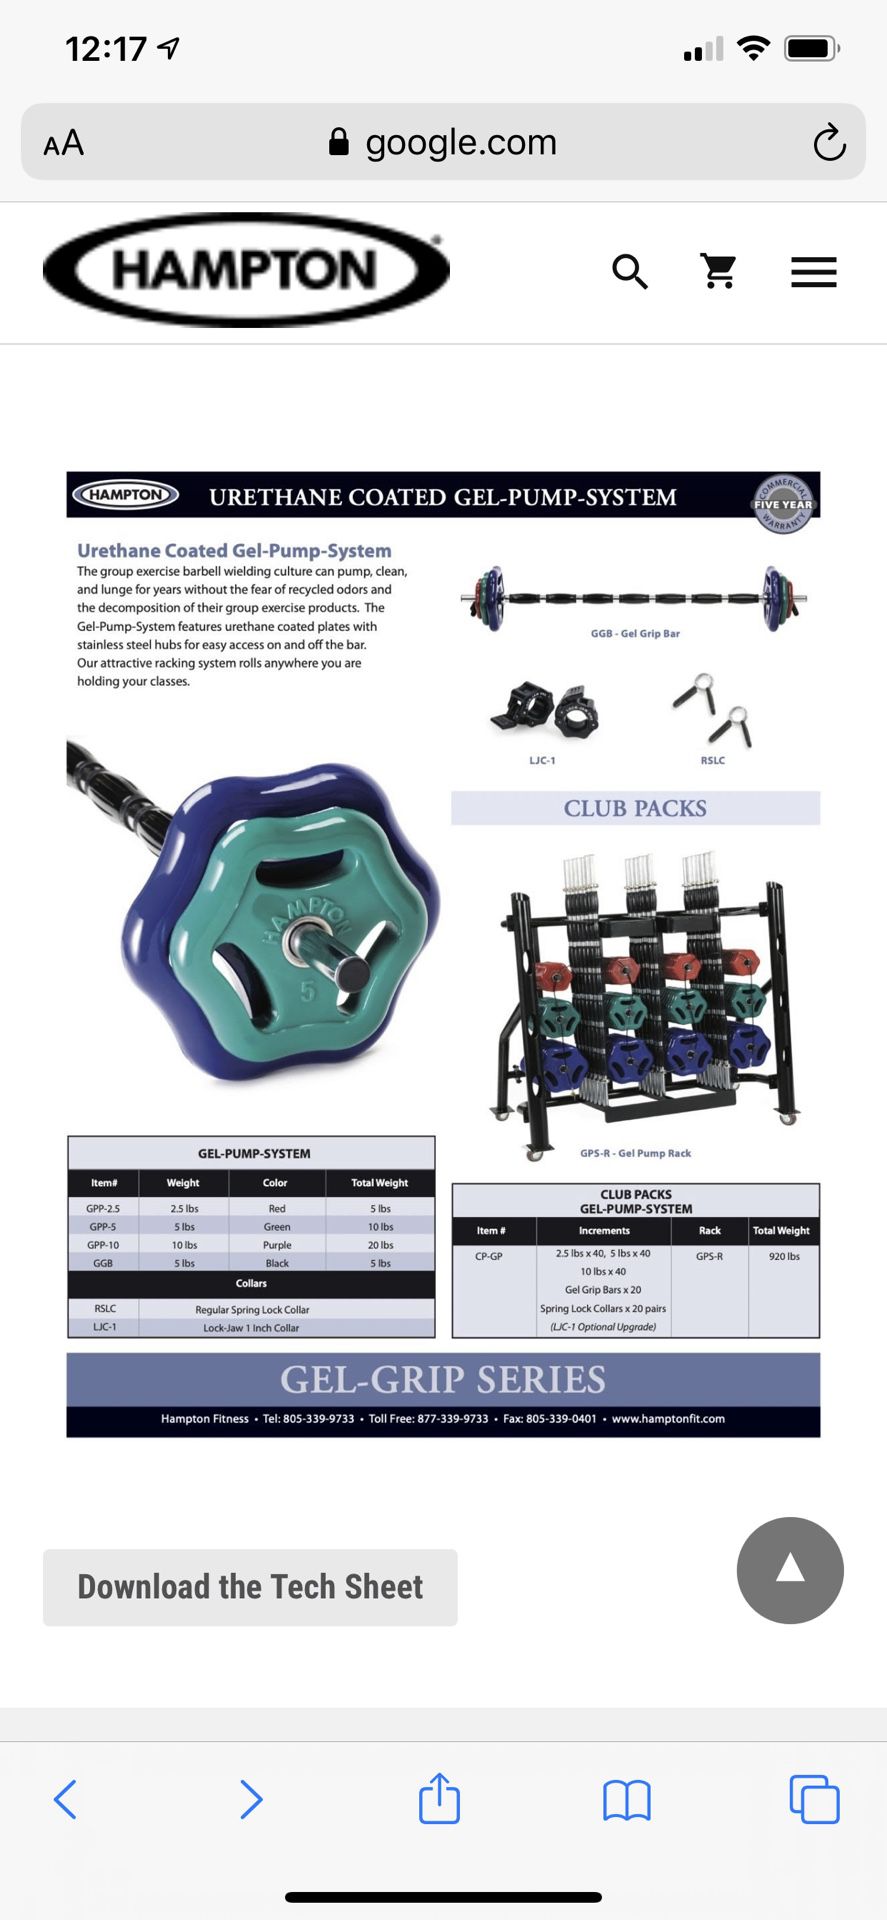 Gel grip set of weights - Body Pump / Grit / Les Mills